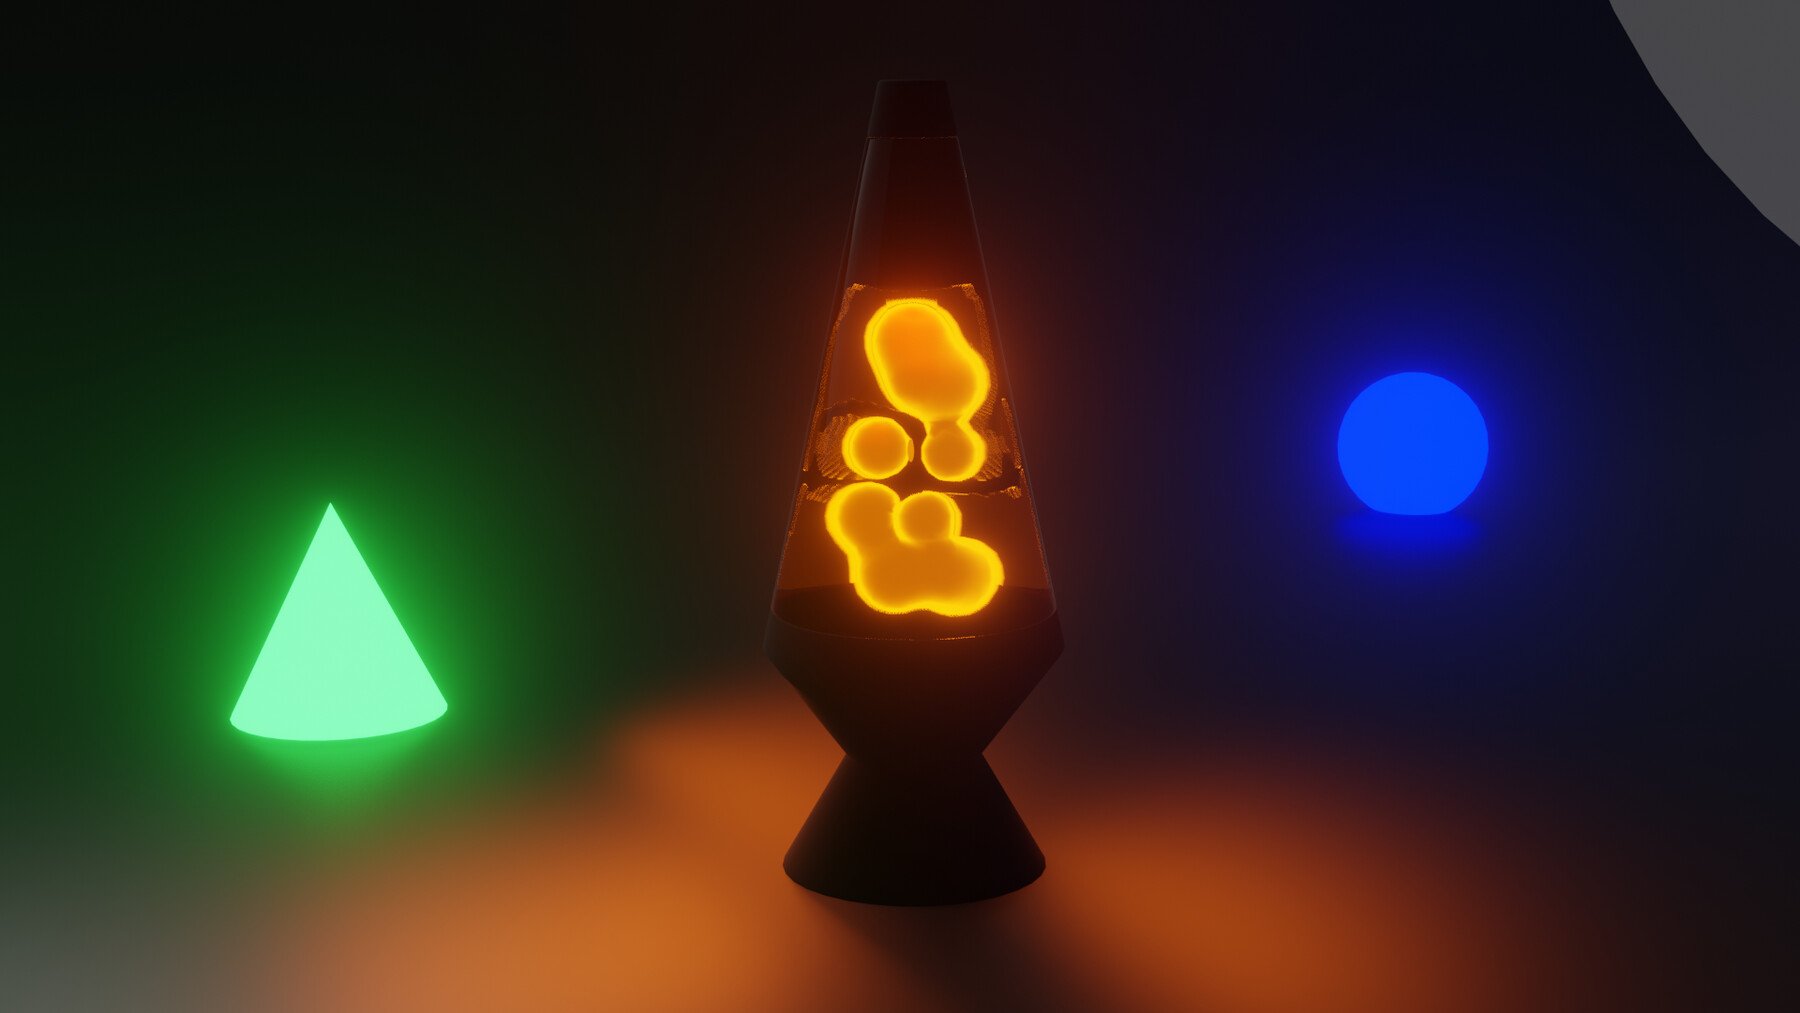 ArtStation - Lava Lamp Animation in Blender | Resources